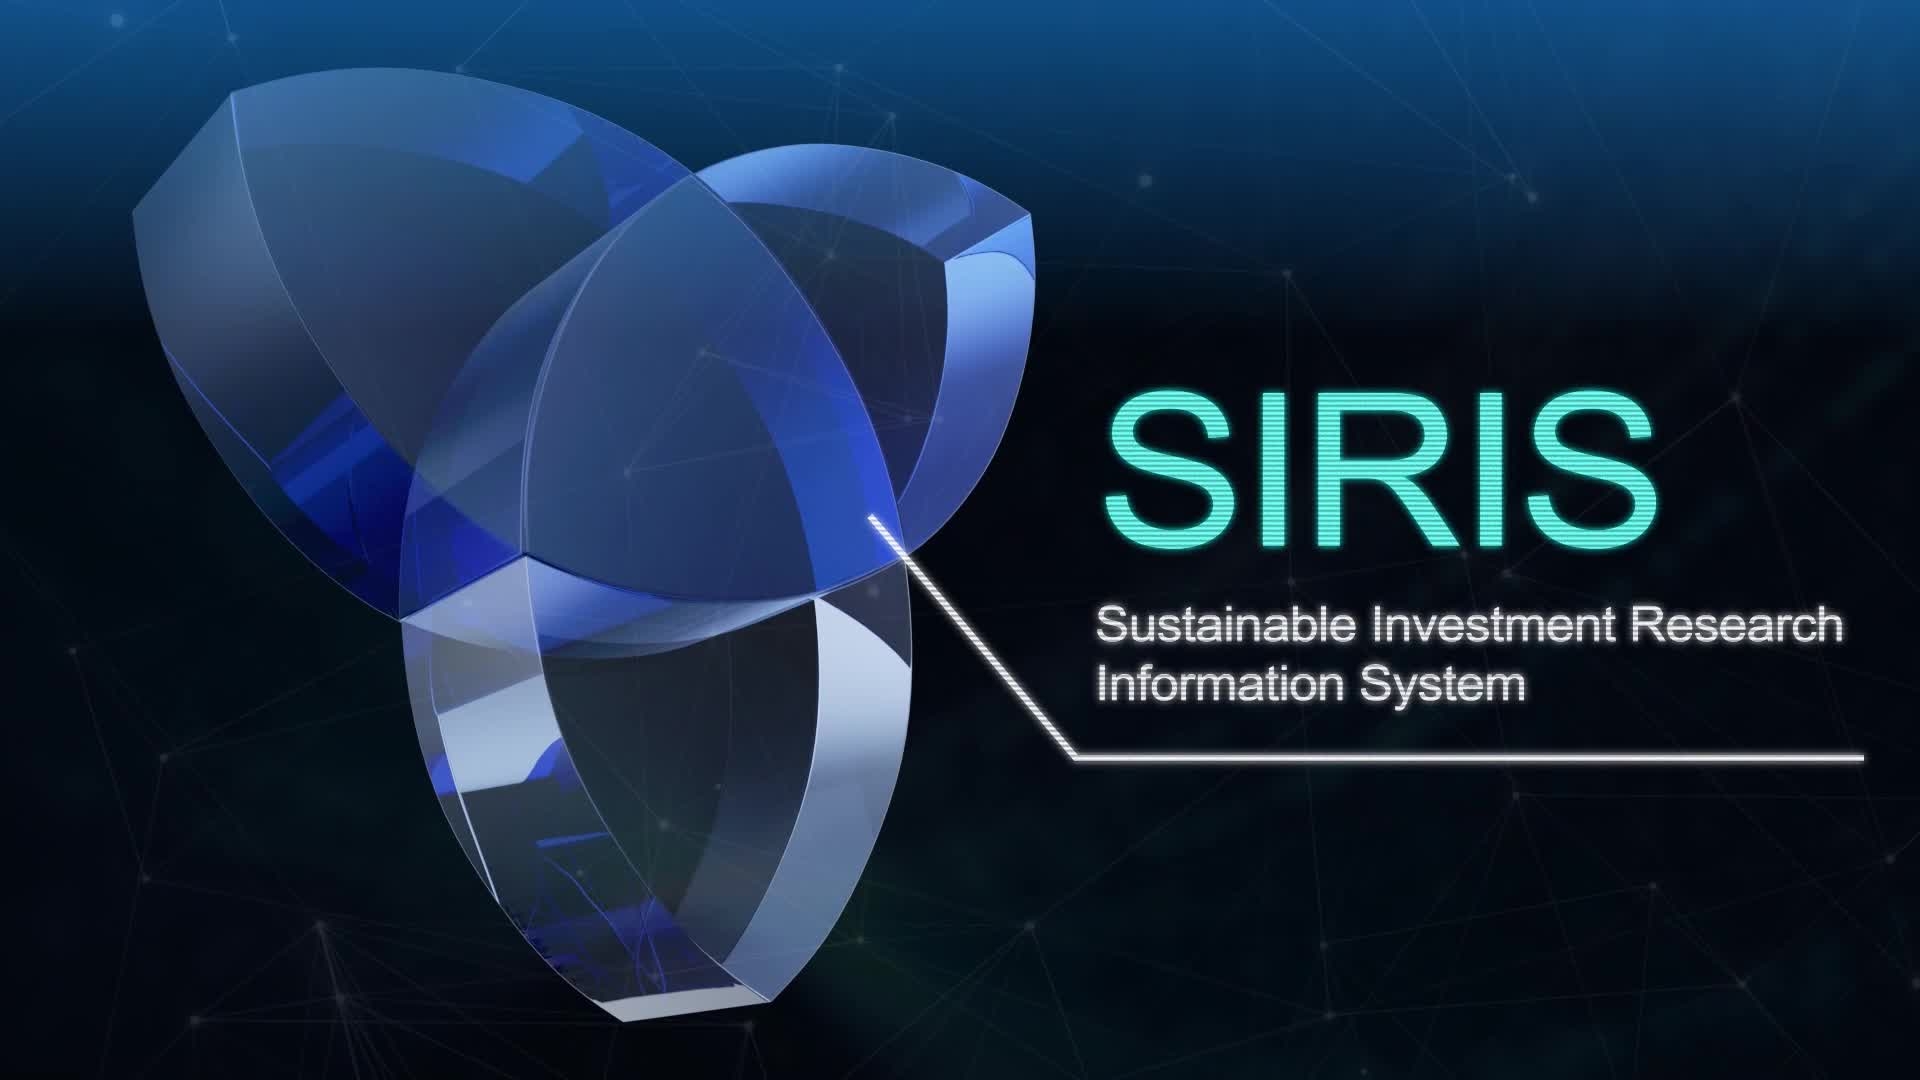 Das Sustainable Investment Research Information System (SIRIS) von Union Investment